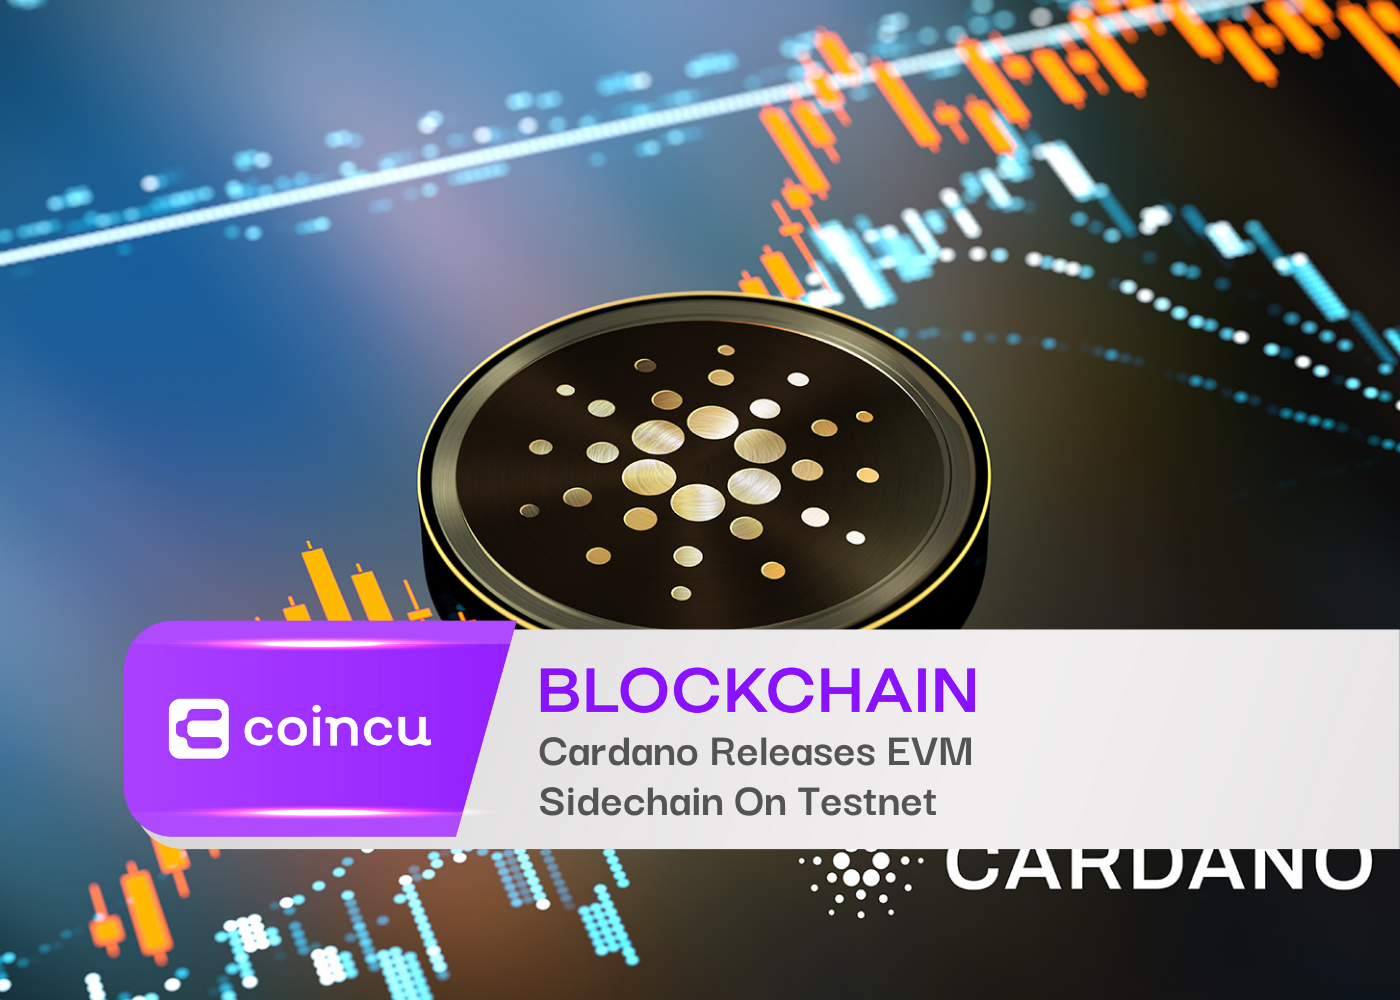 Cardano Releases EVM Sidechain On Testnet